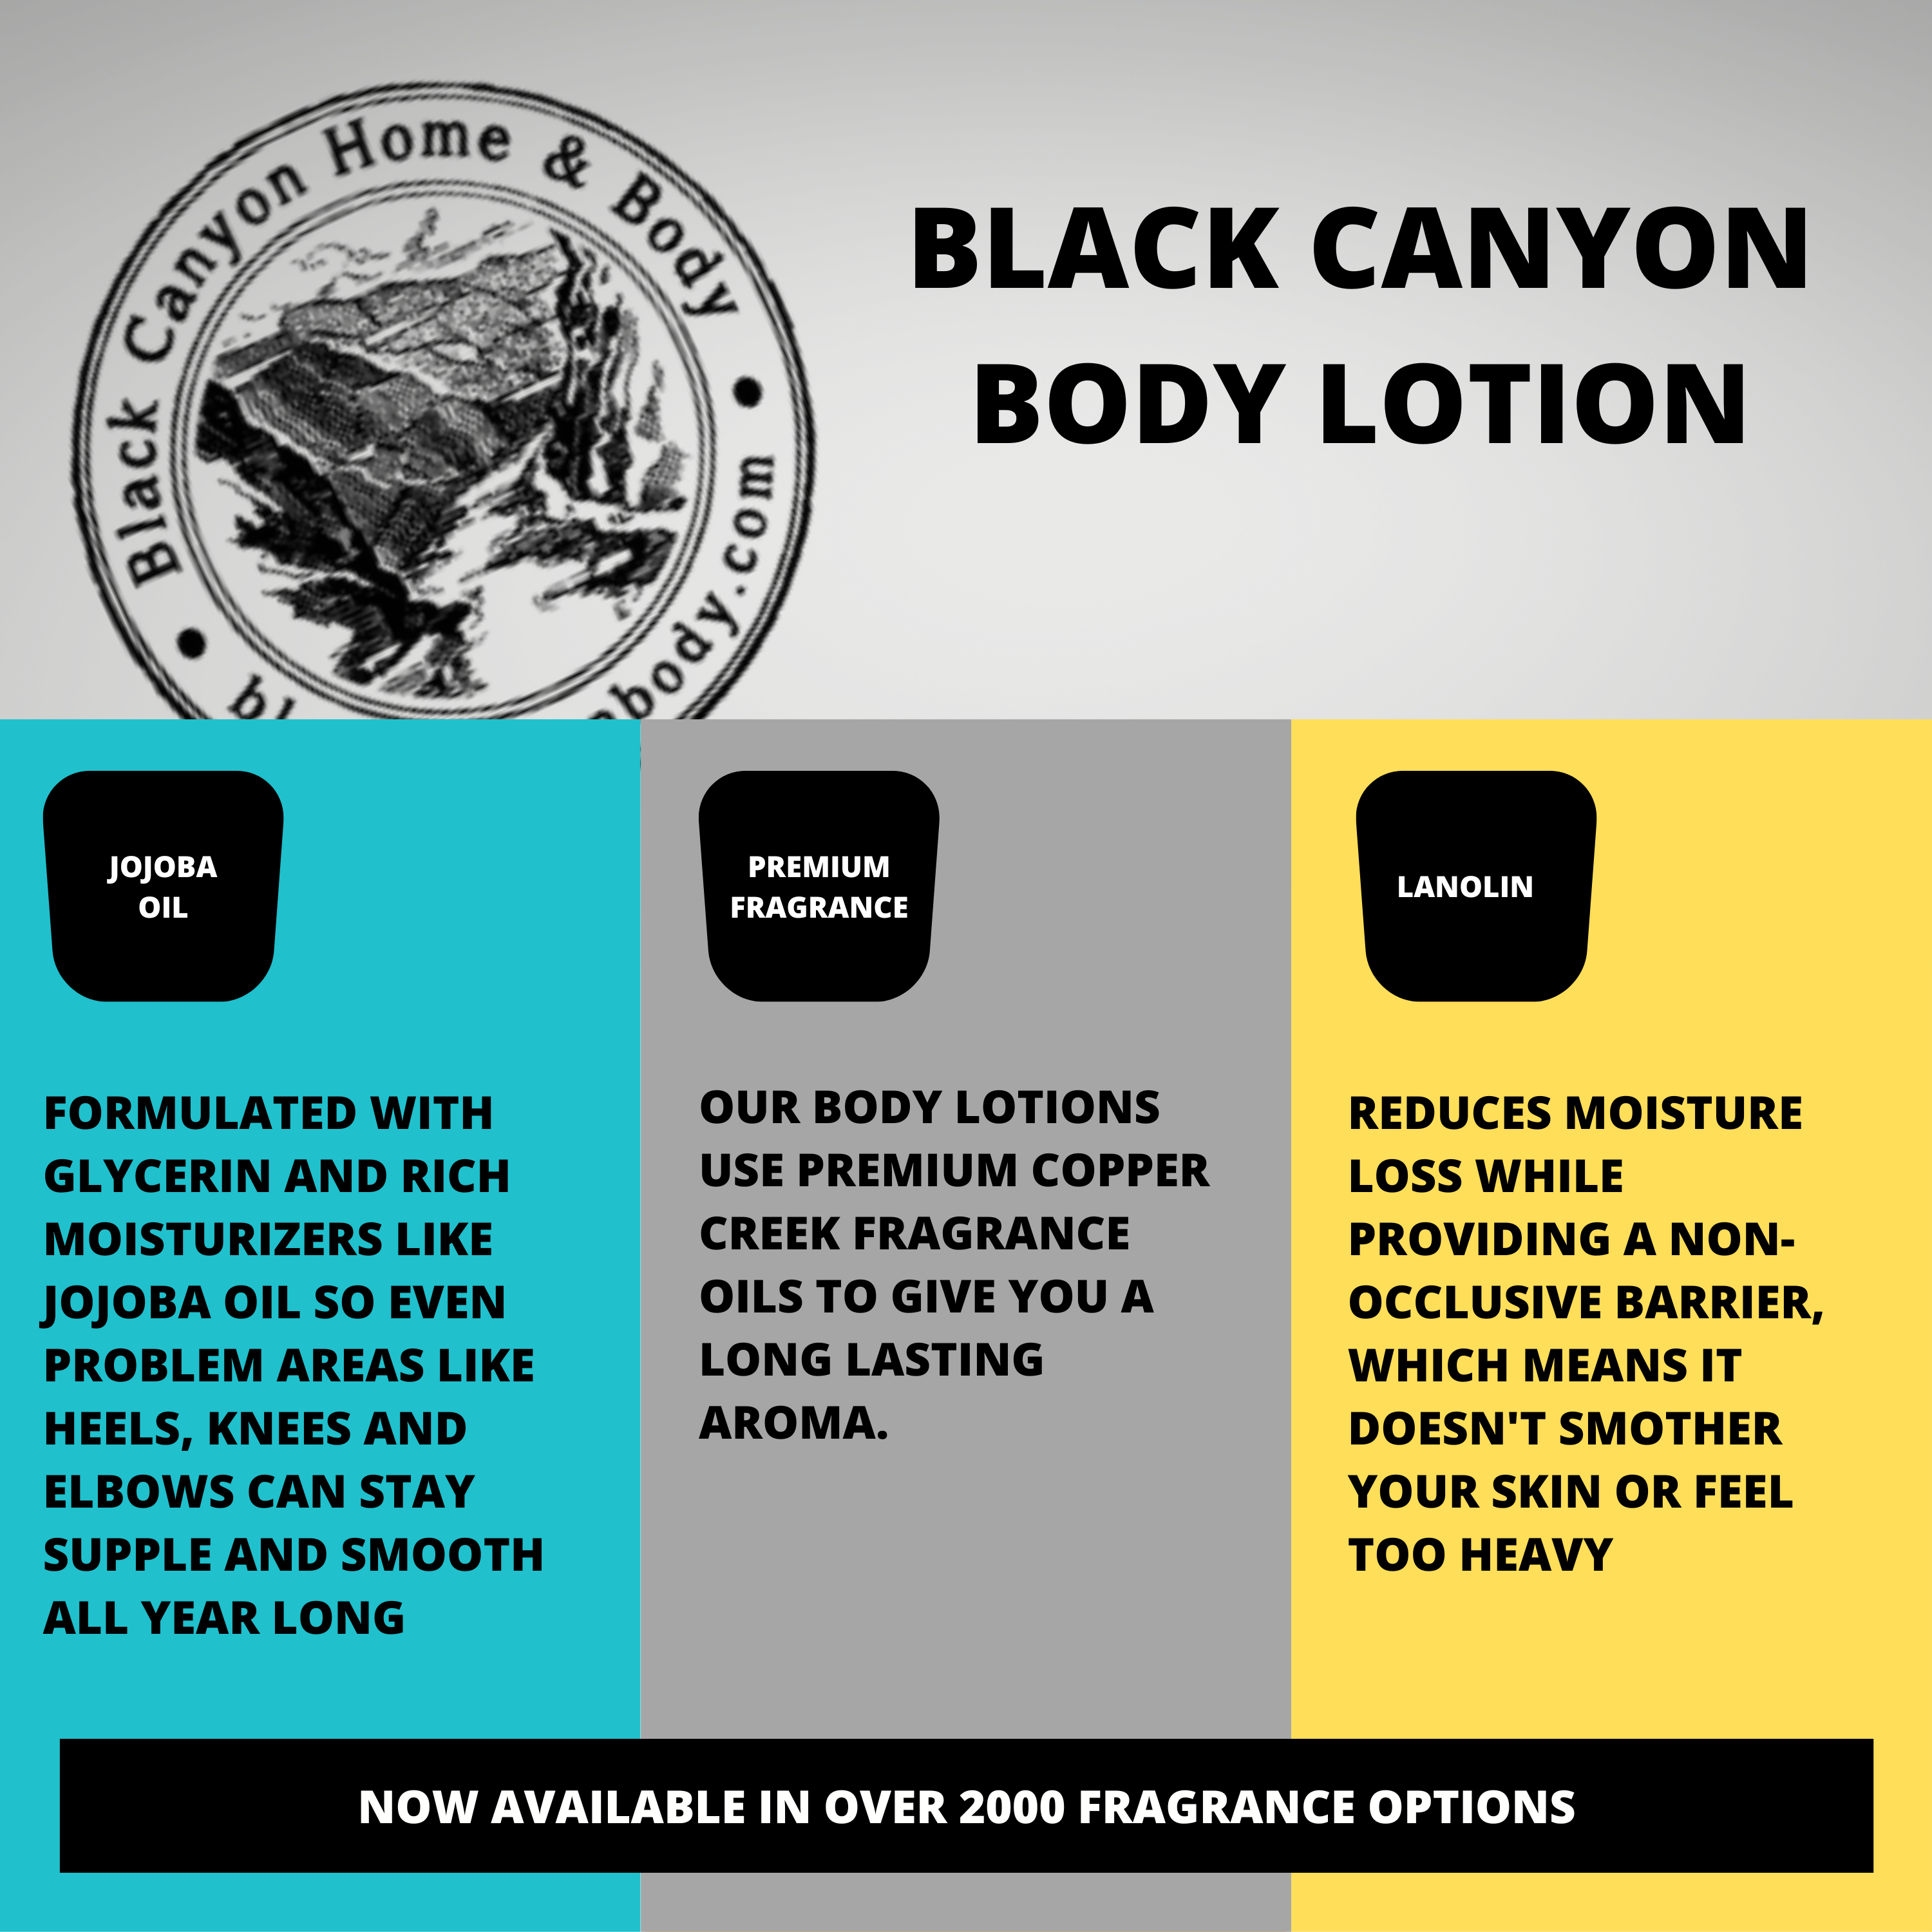 Black Canyon Orange Blossom & Sandalwood Scented Luxury Body Lotion with Lanolin and Jojoba Oil